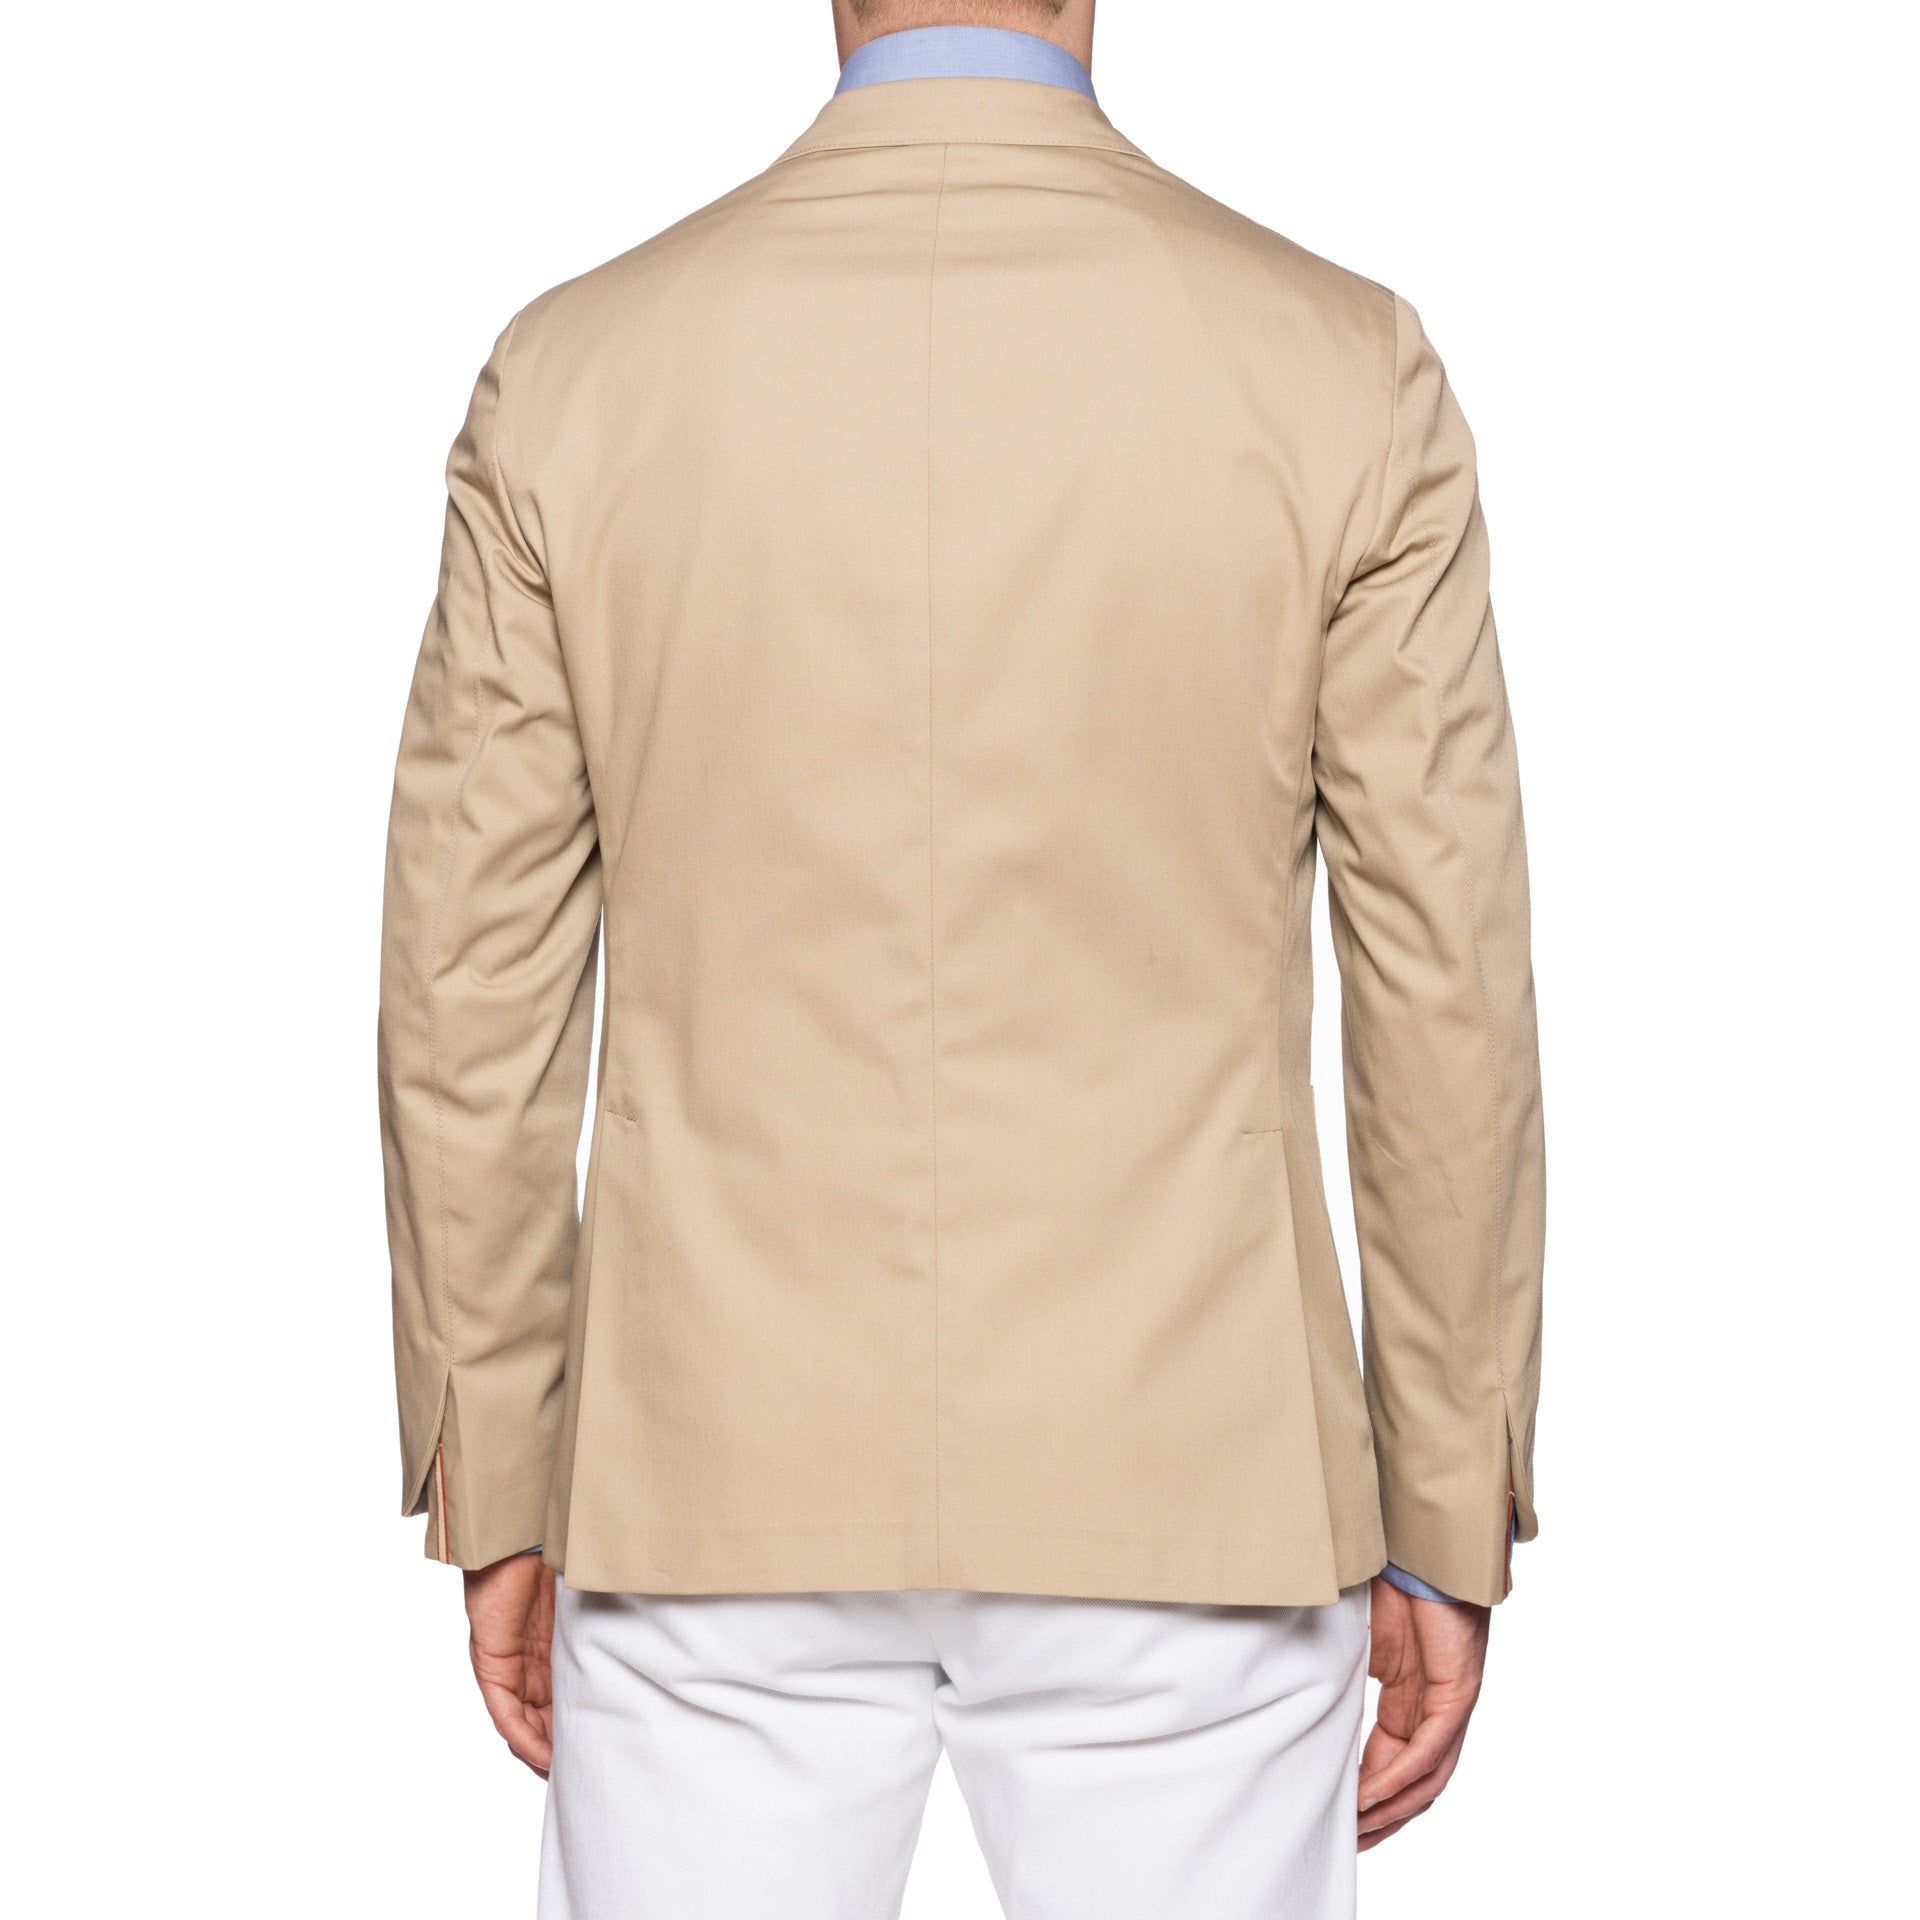 BOGLIOLI Milano Galleria "73" Beige Cotton Blend Unlined Jacket EU 50 NEW US 40 BOGLIOLI